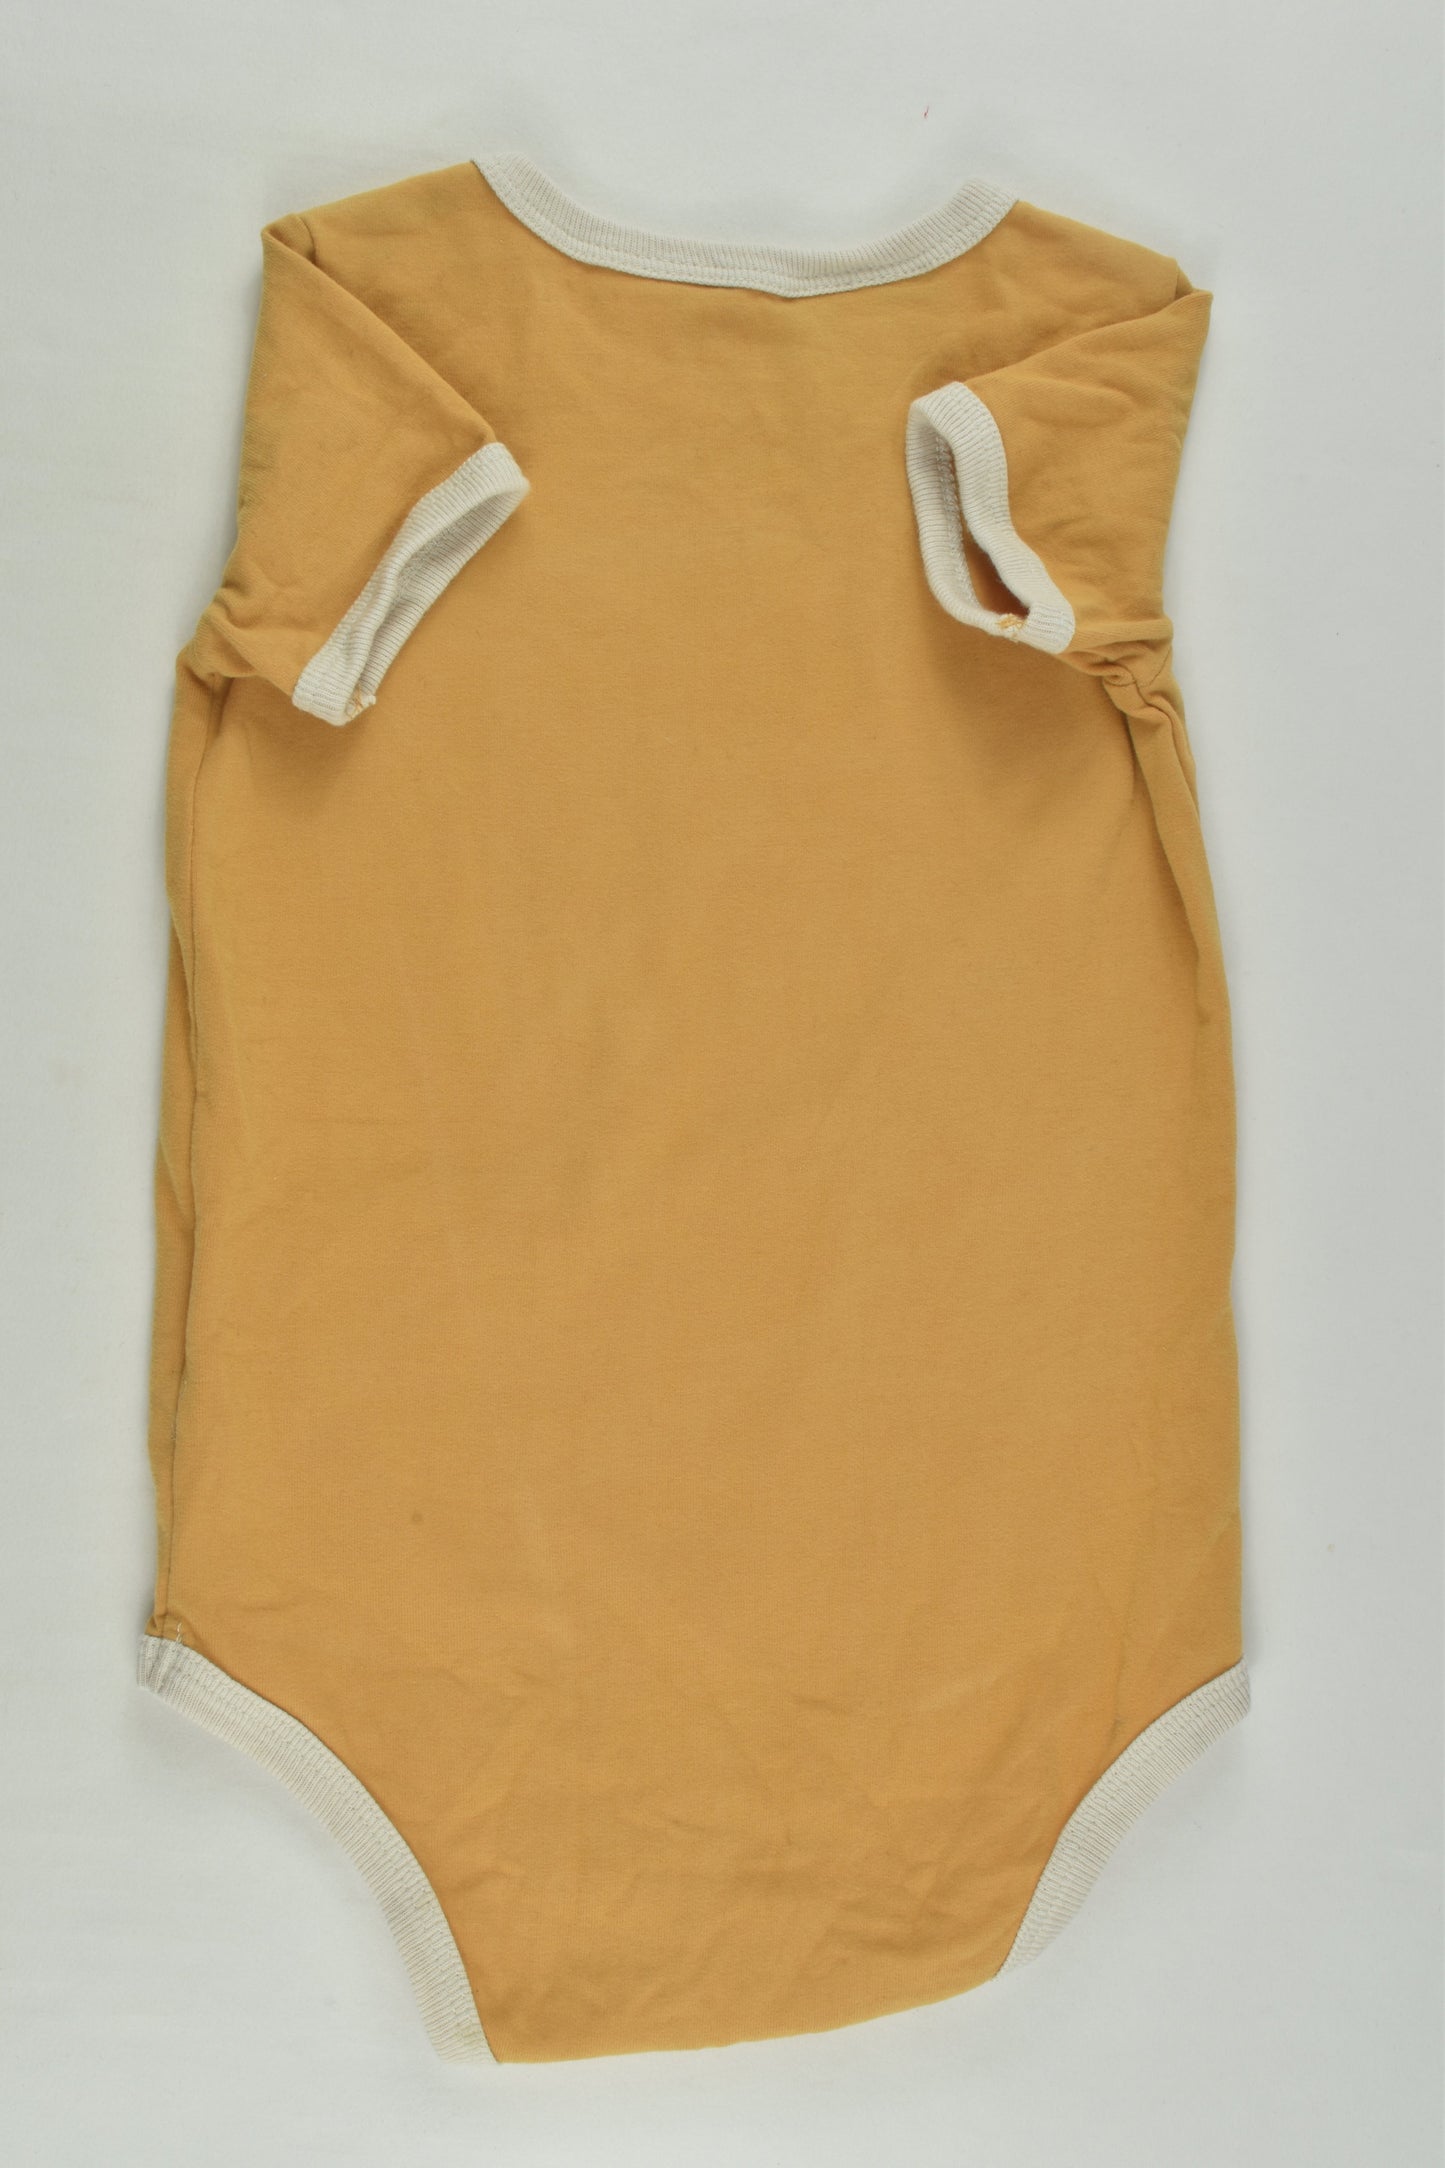 Gumnut Babies by Cotton On Baby Size 1 Bodysuit